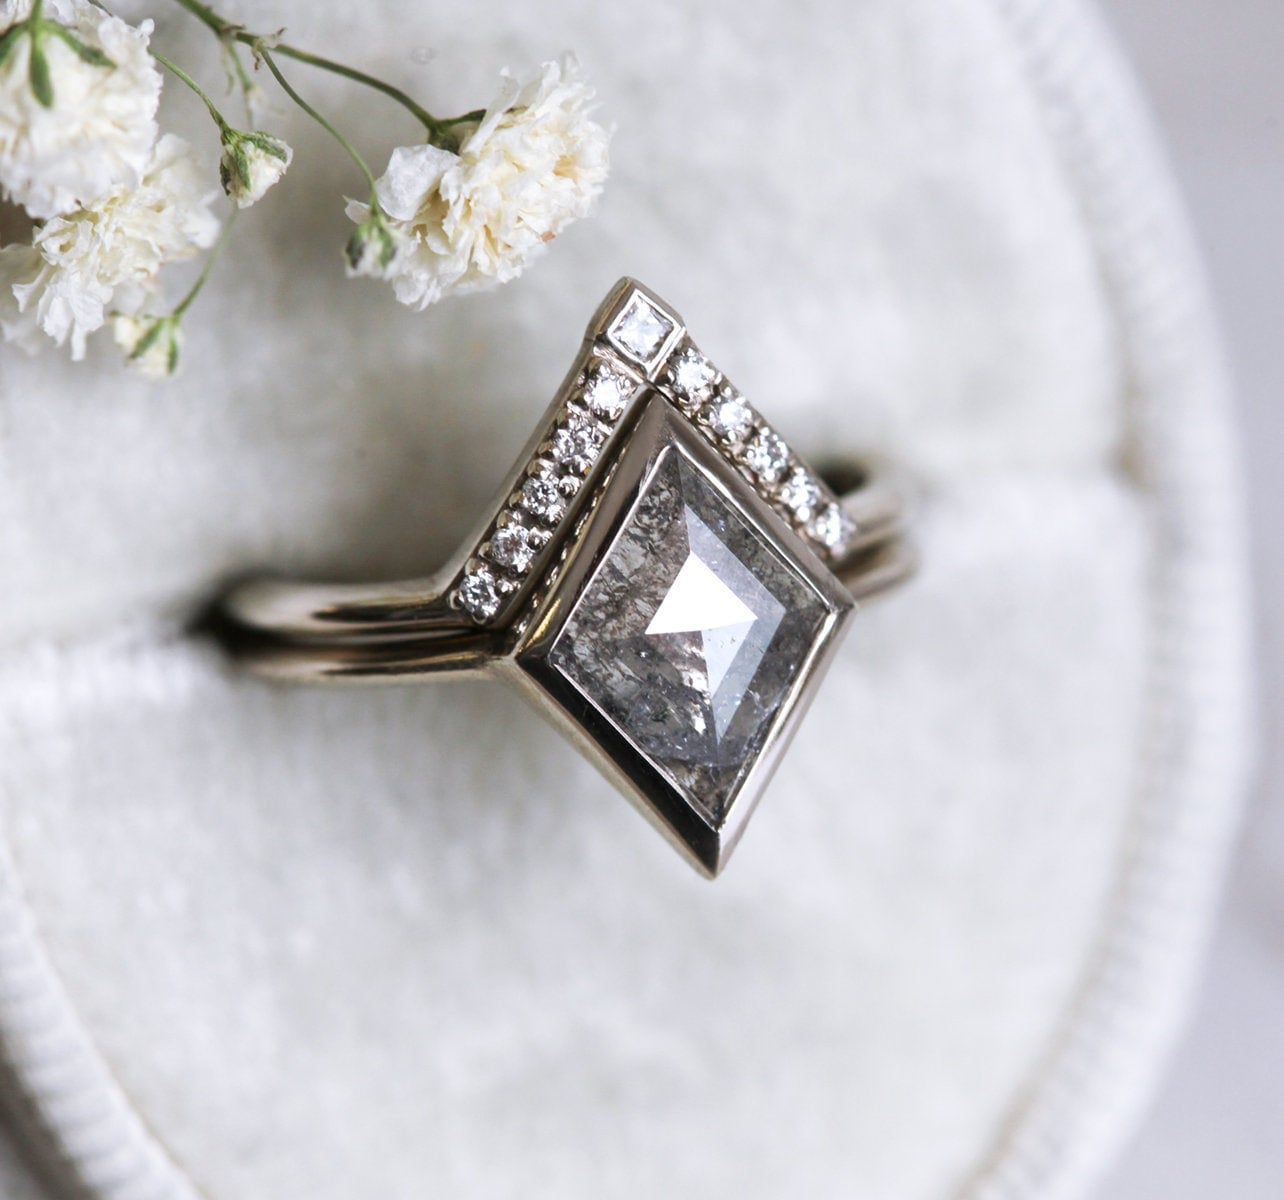 11 Pcs OM4101 Best Price Diamond Salt and Pepper Round Rose Cut Minimal Diamond Engagement Ring Jewelry Diamond 1.19 CT 2.8 To 3.0 MM